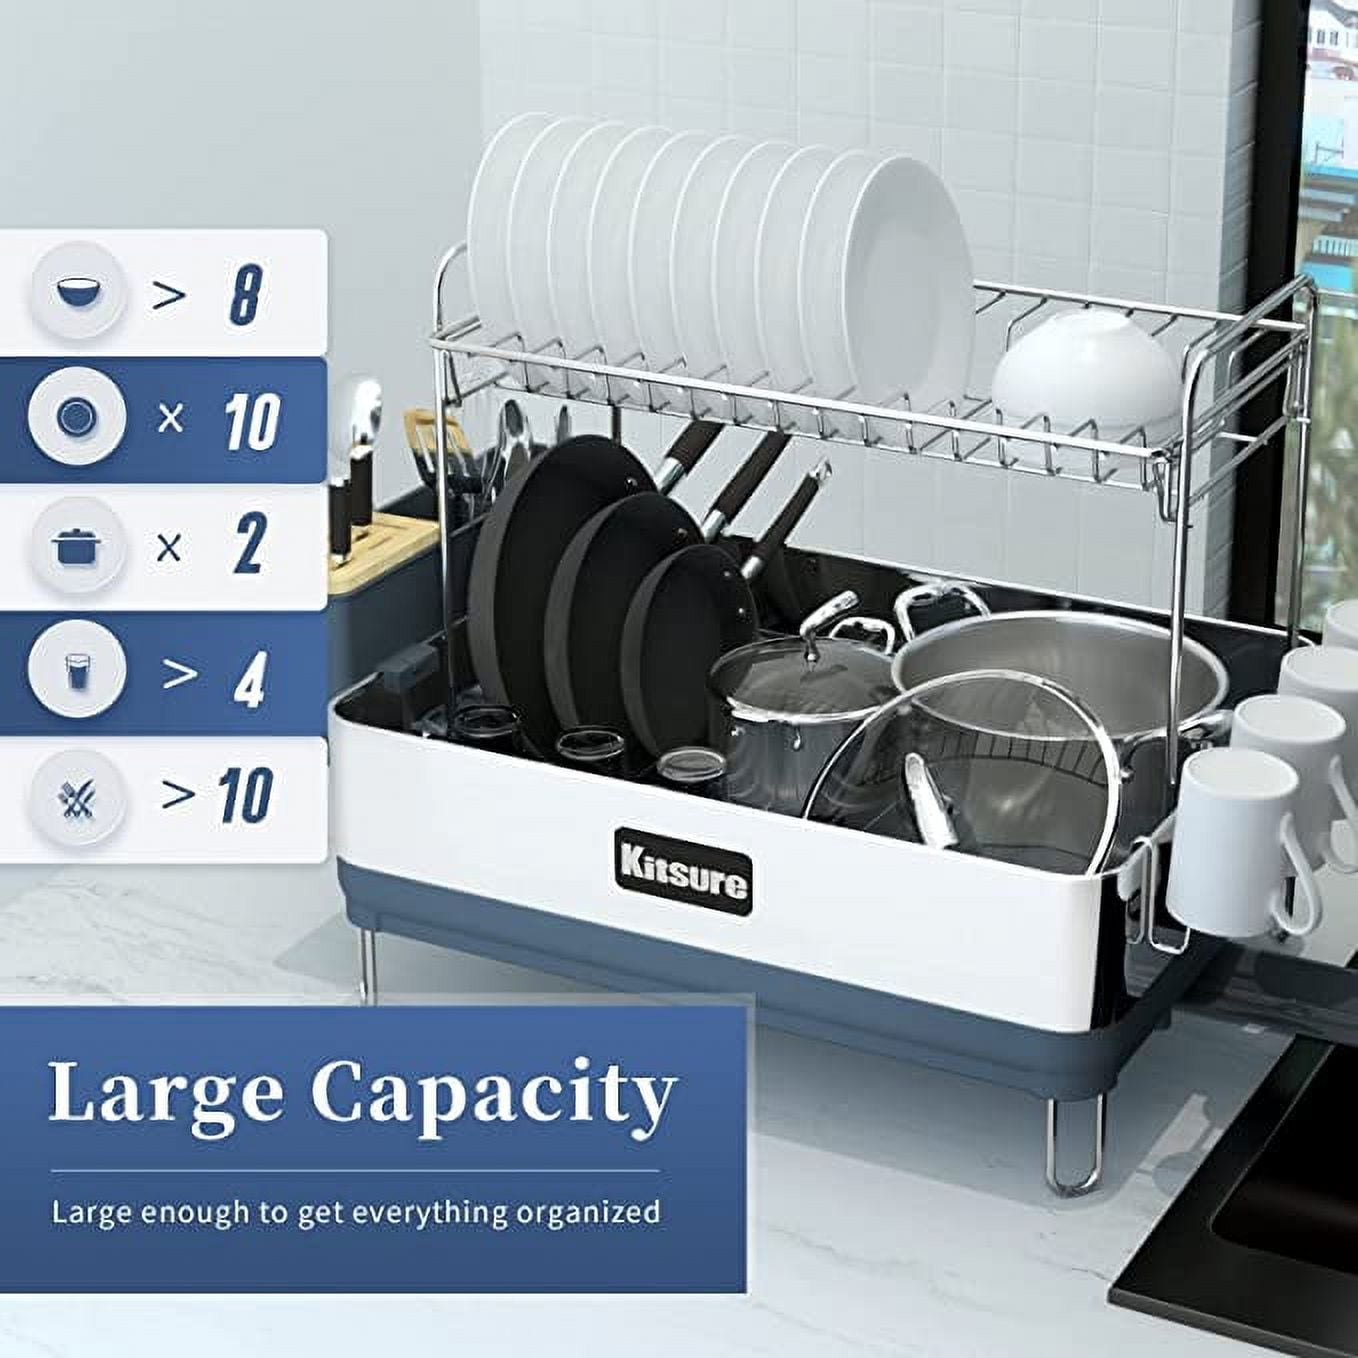 Dish Drying Rack, Larger Capacity 2&3 Tier Dish Racks And